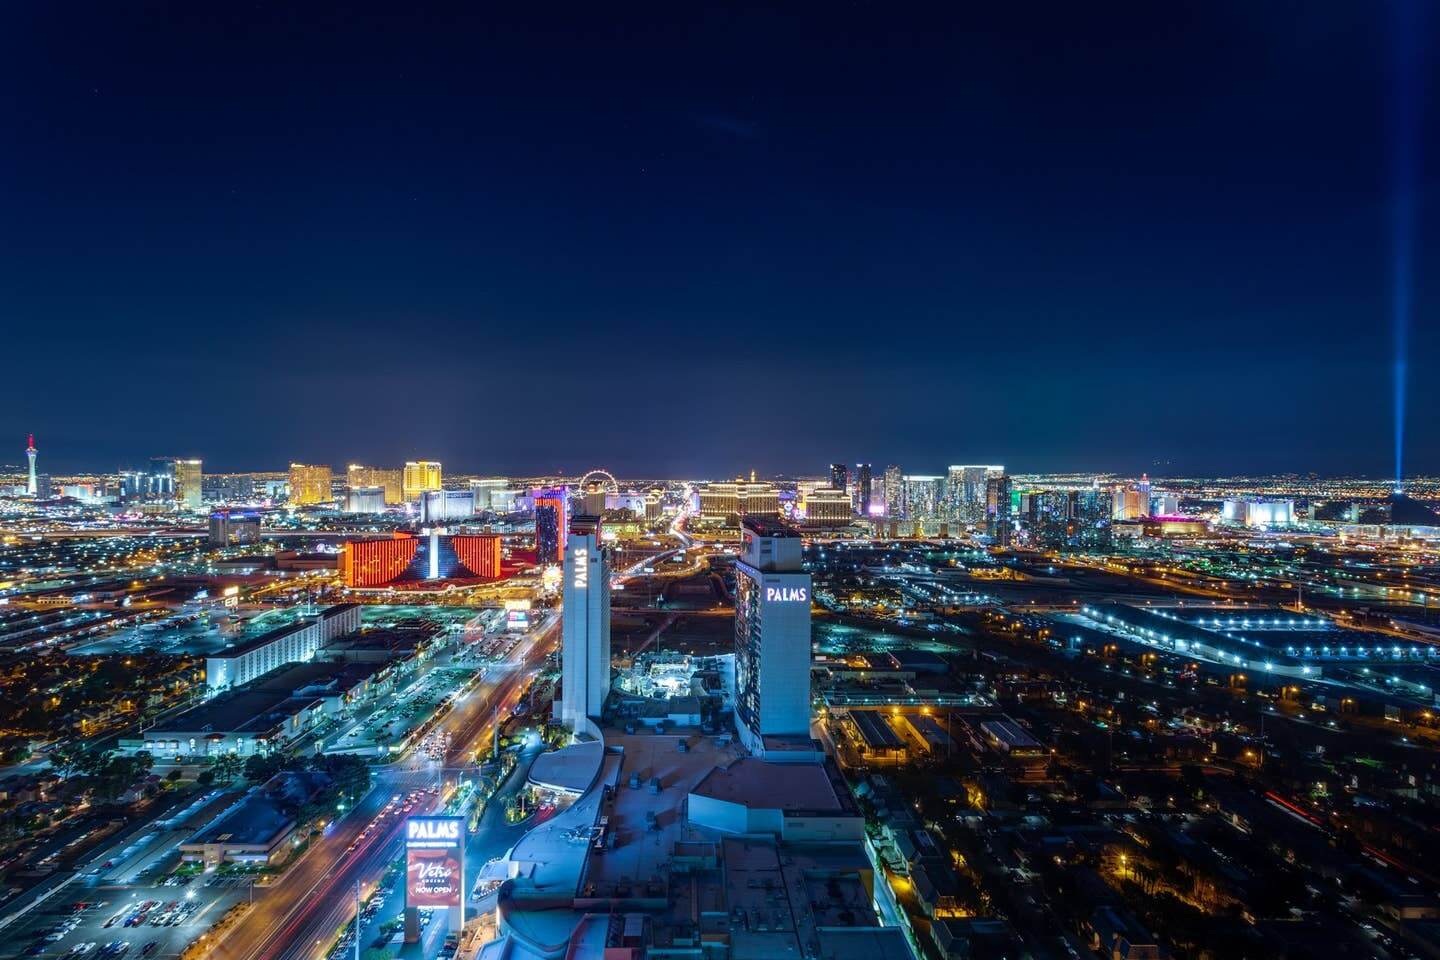 Las Vegas Penthouse View of the Strip